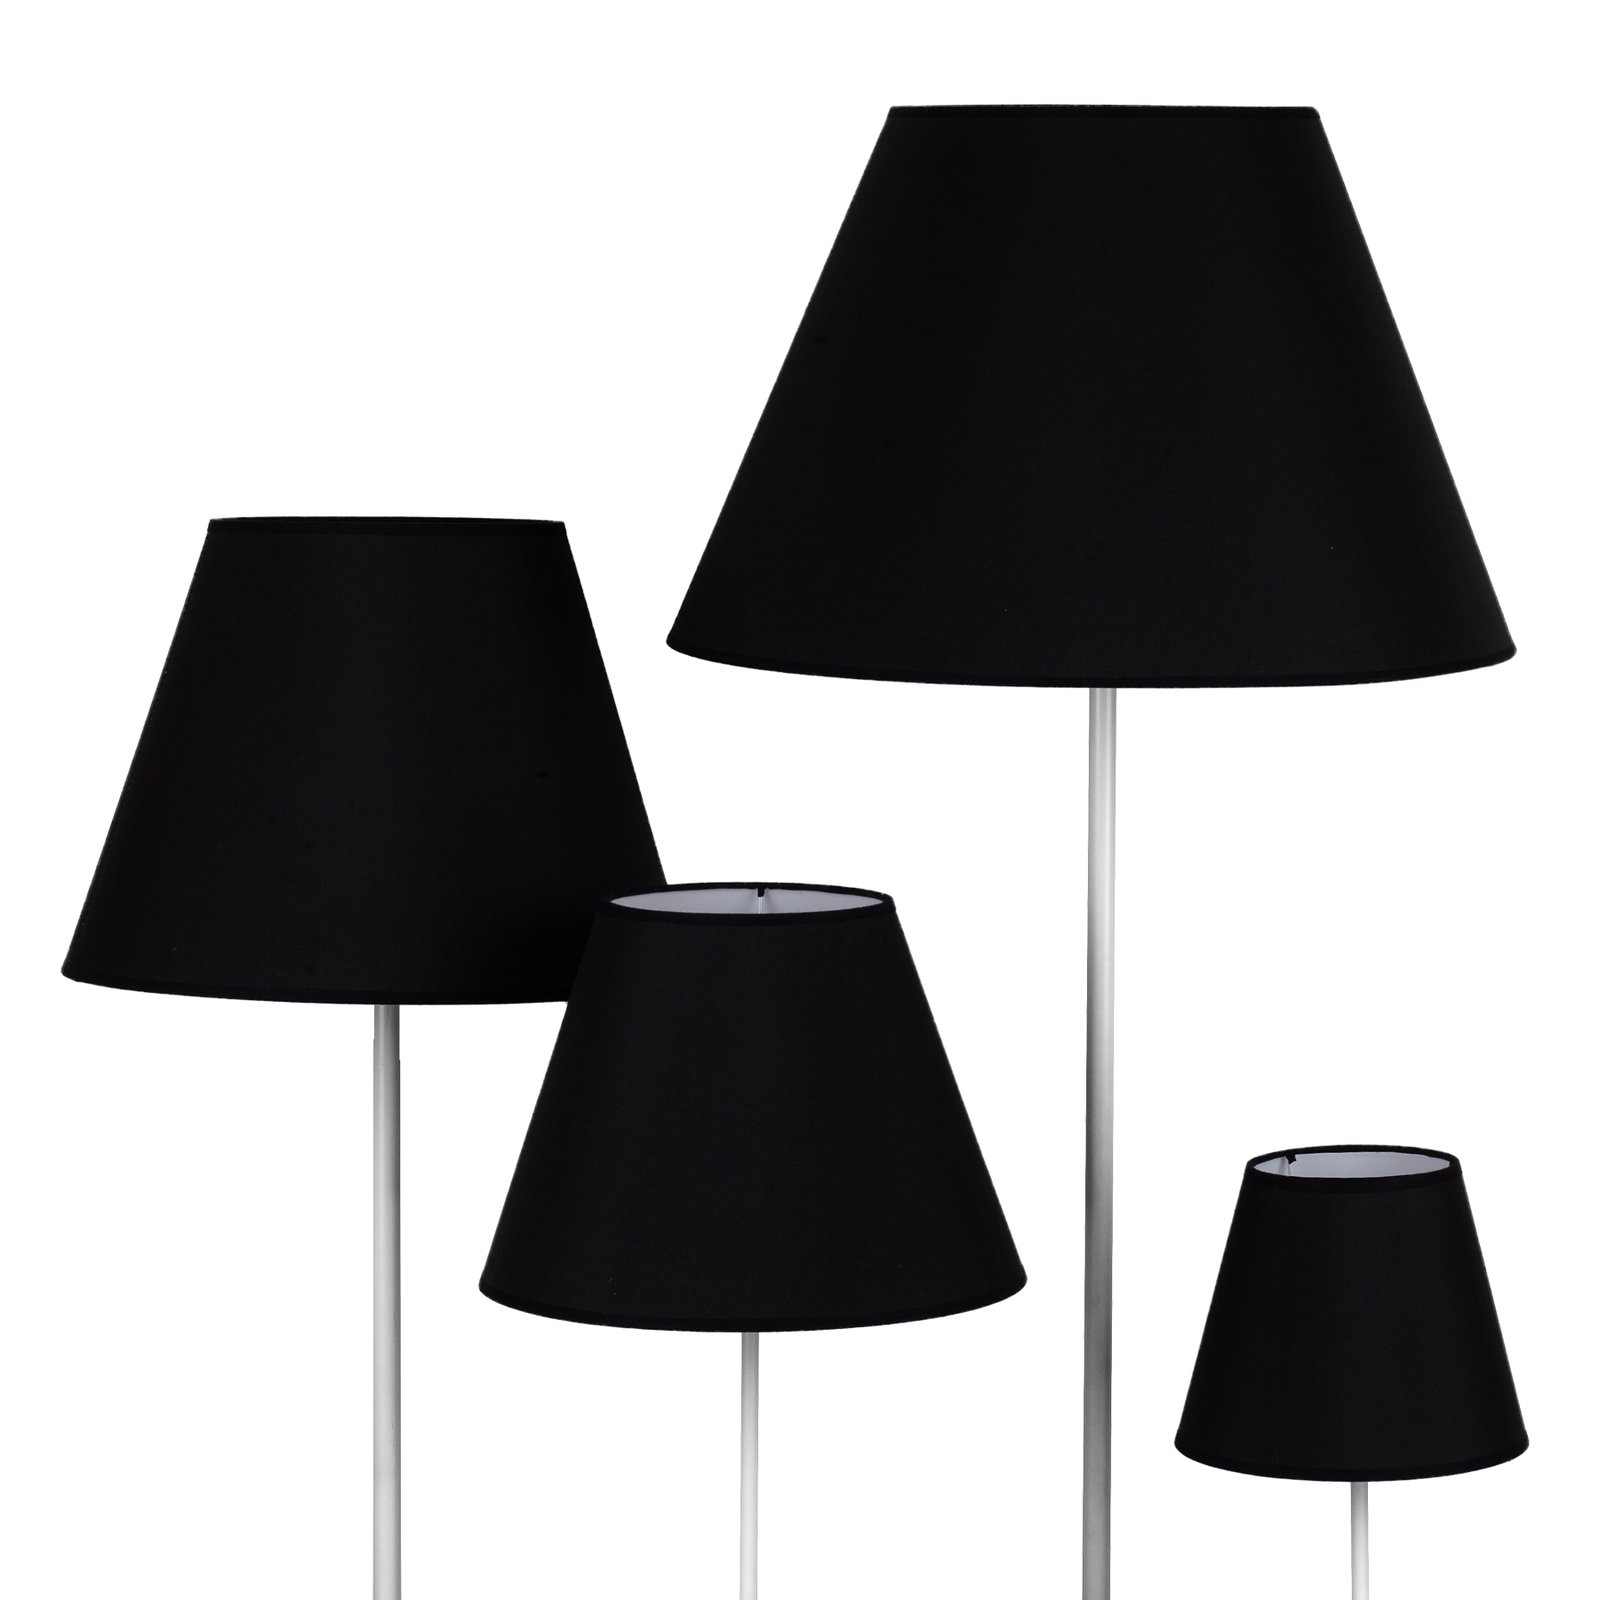 Sofia lampshade height 21 cm, black/white